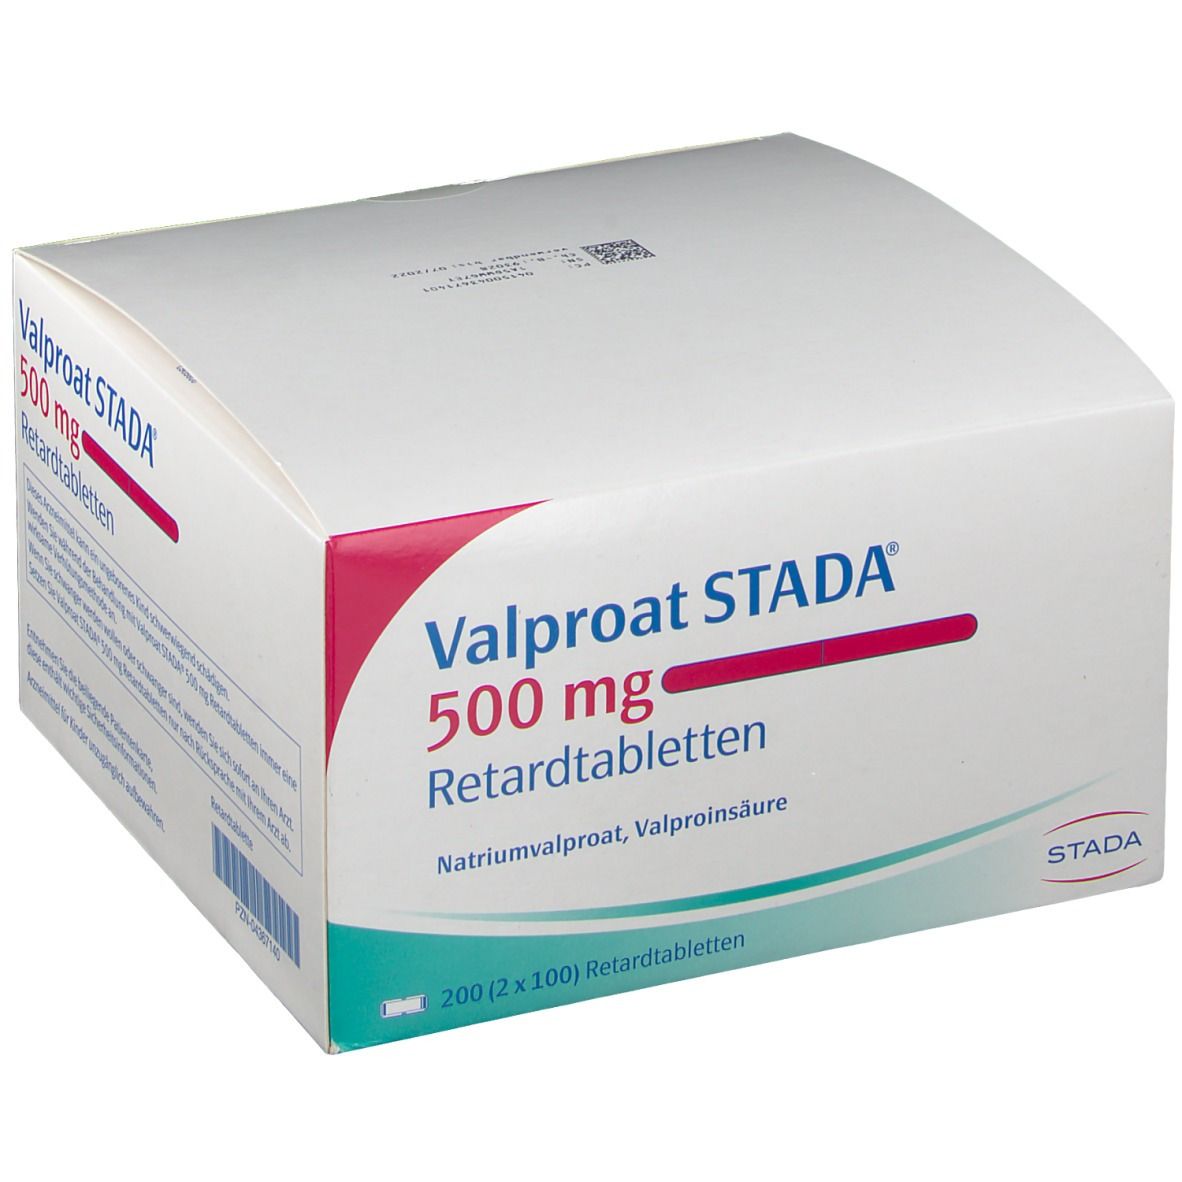 Valproat STADA® 500 mg